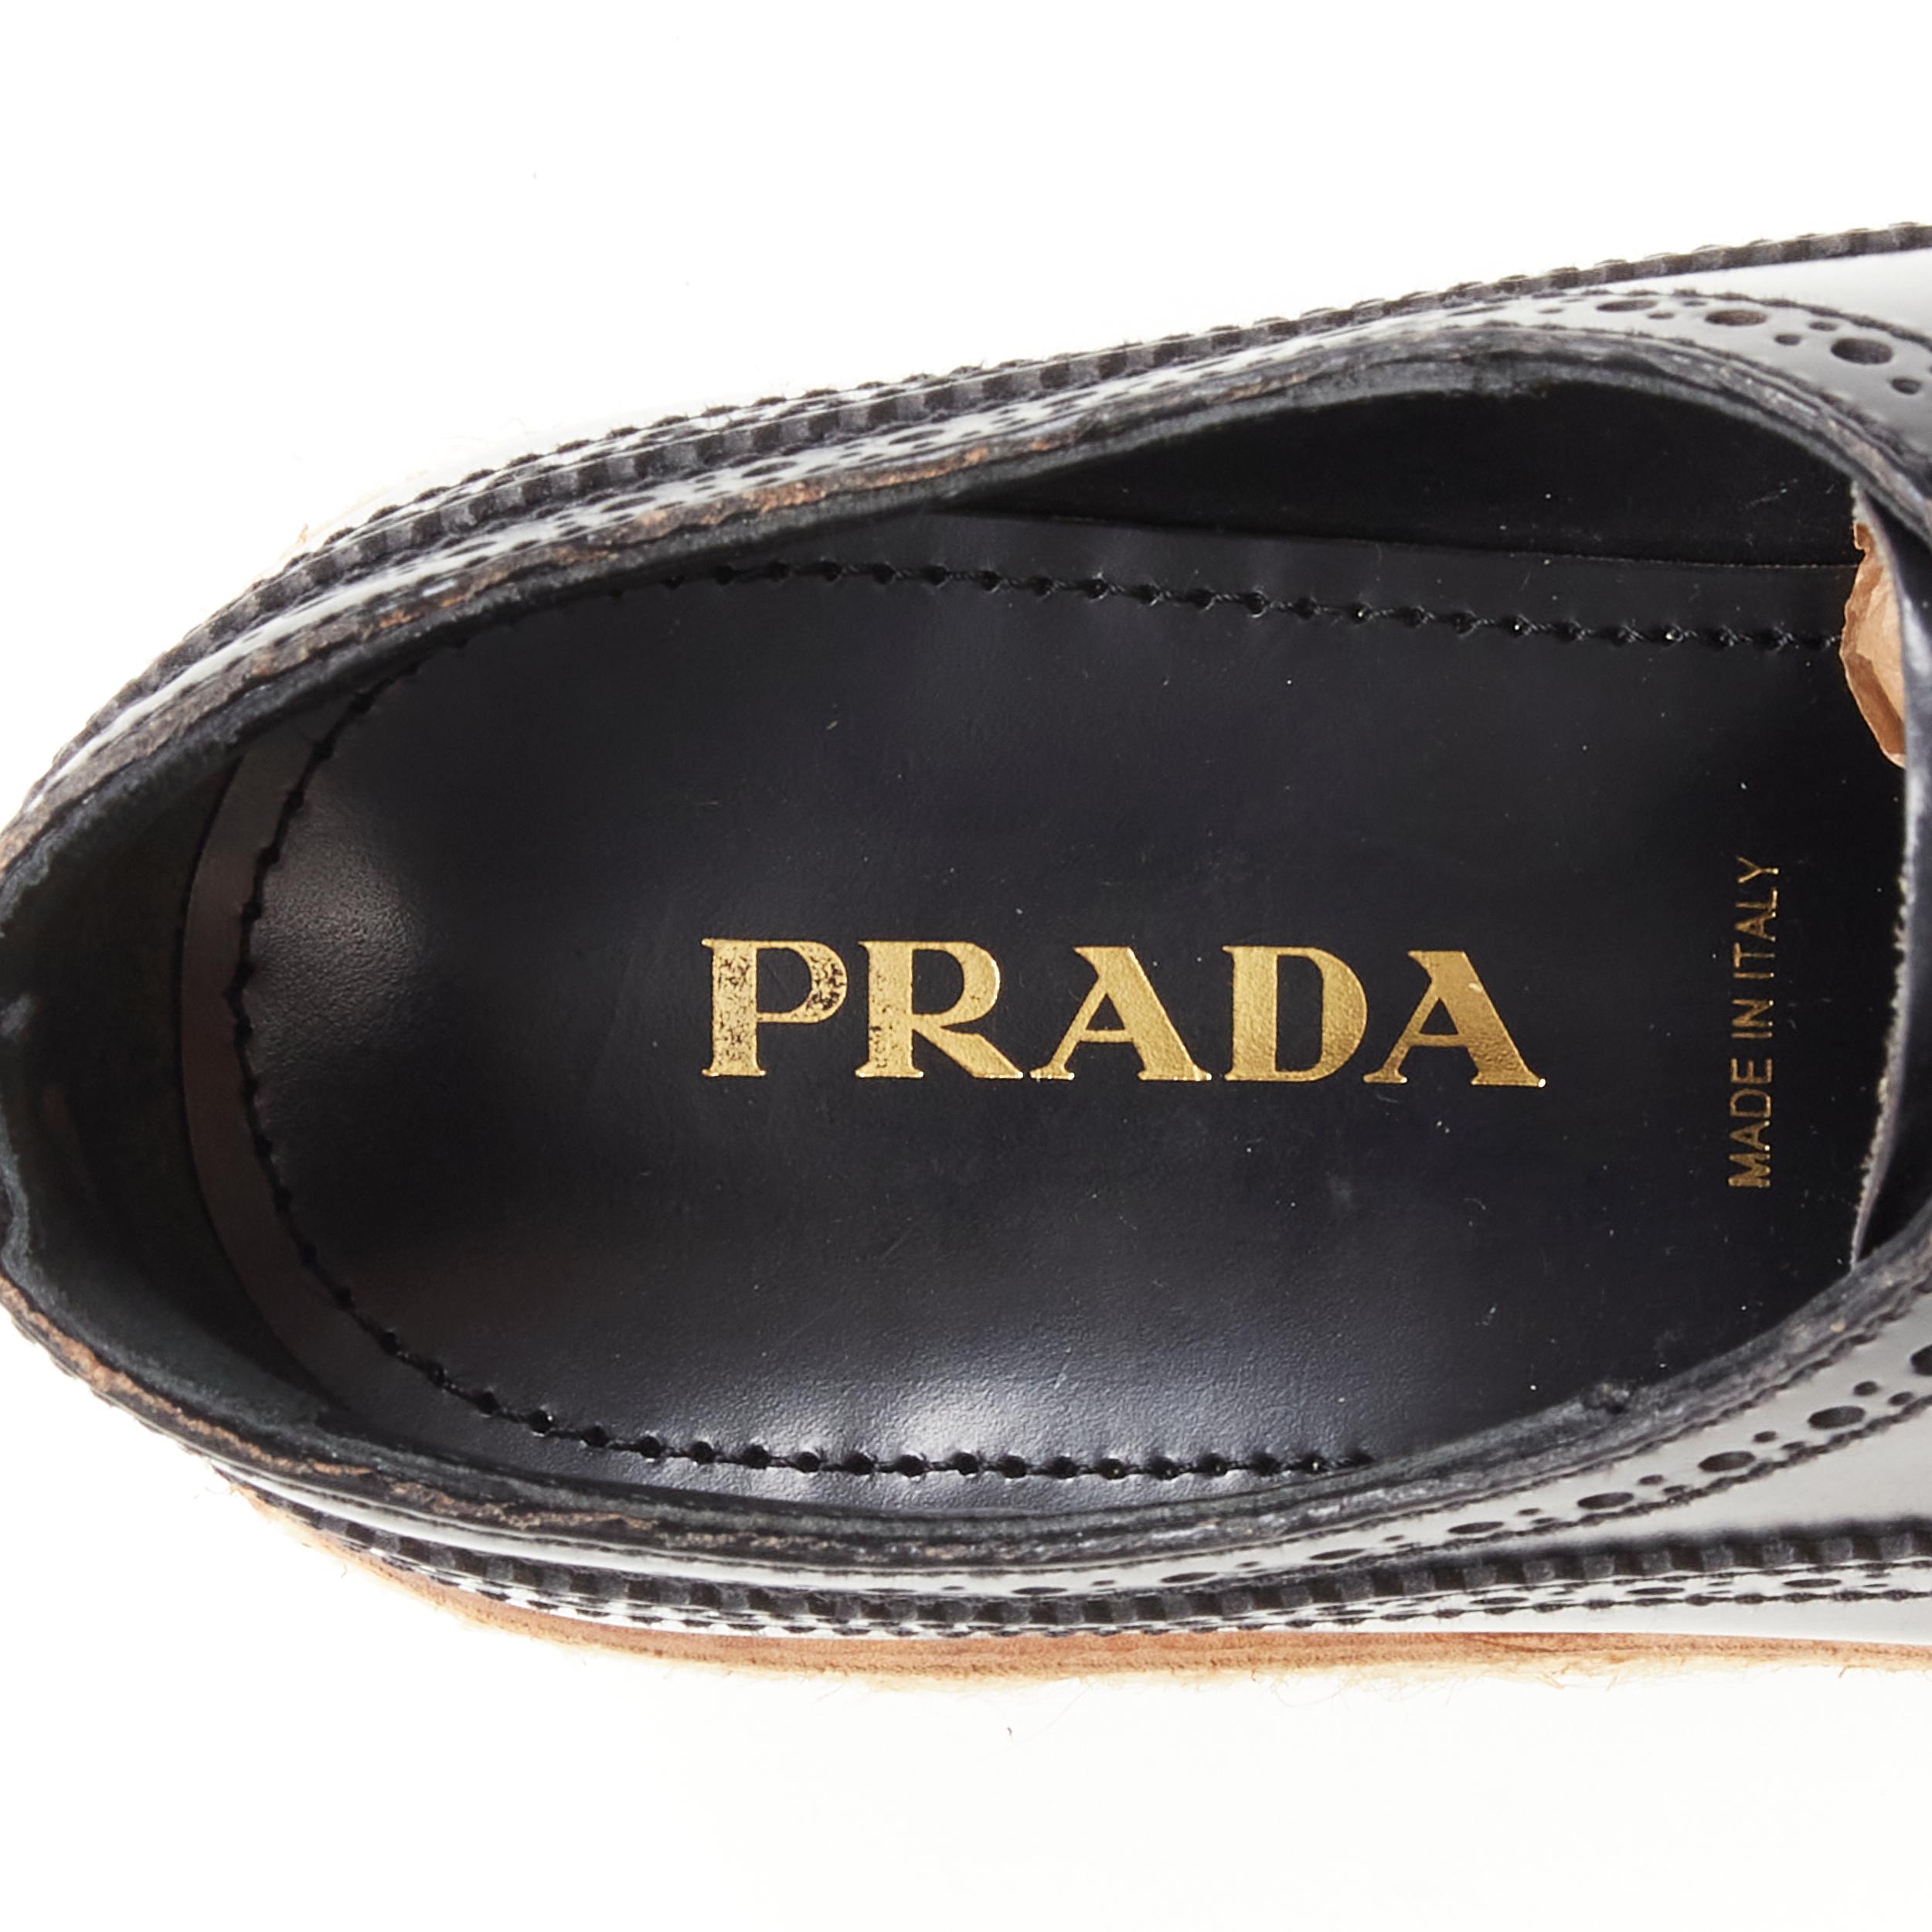 PRADA black perforated leather jute espadrille platform brogue EU36.5 For Sale 2